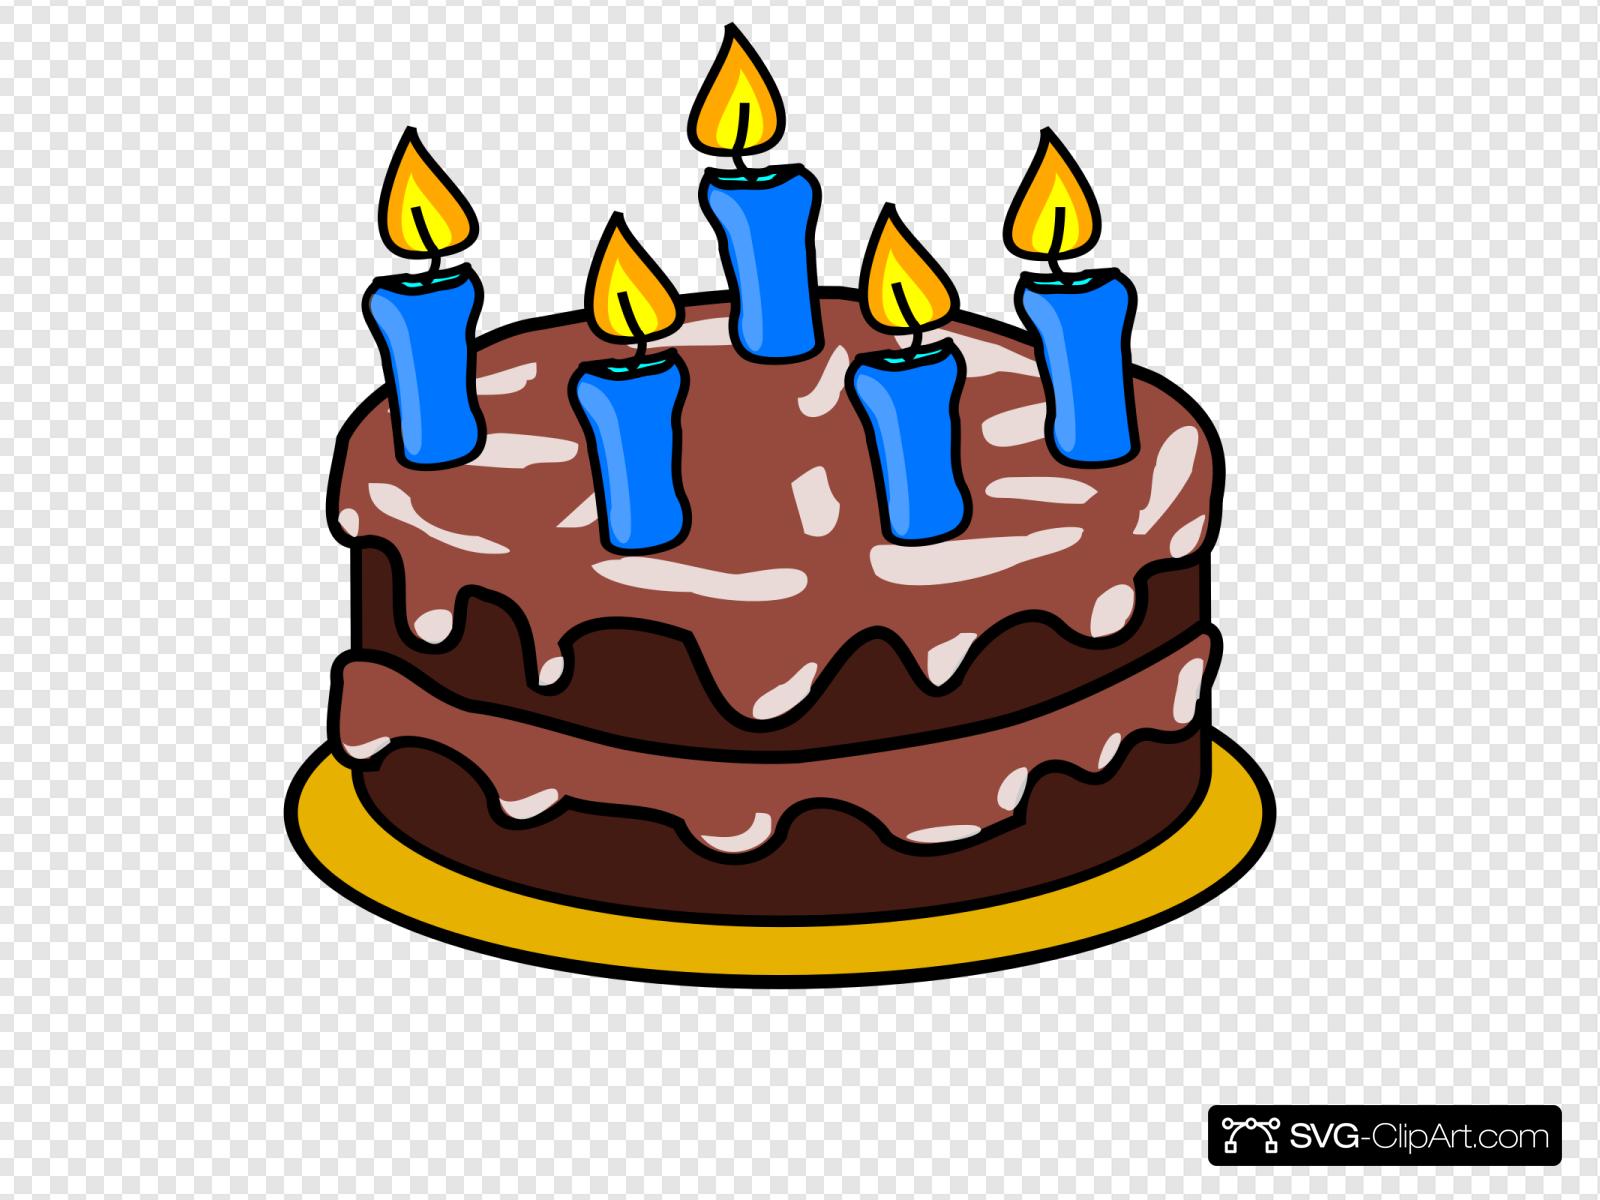 jpg clipart birthday cake